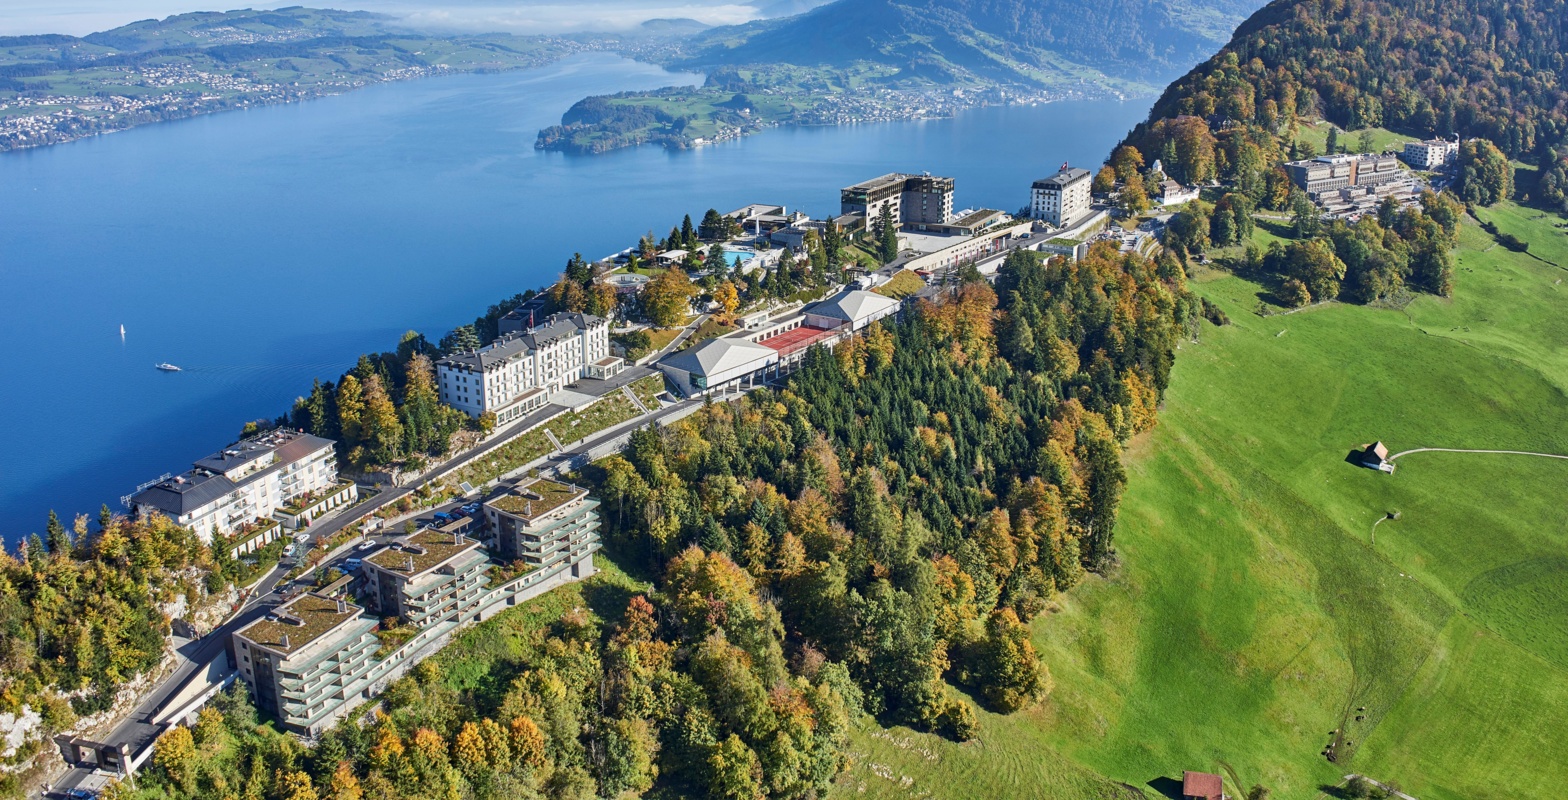 Das Bürgenstock Resort Lake Lucerne heute